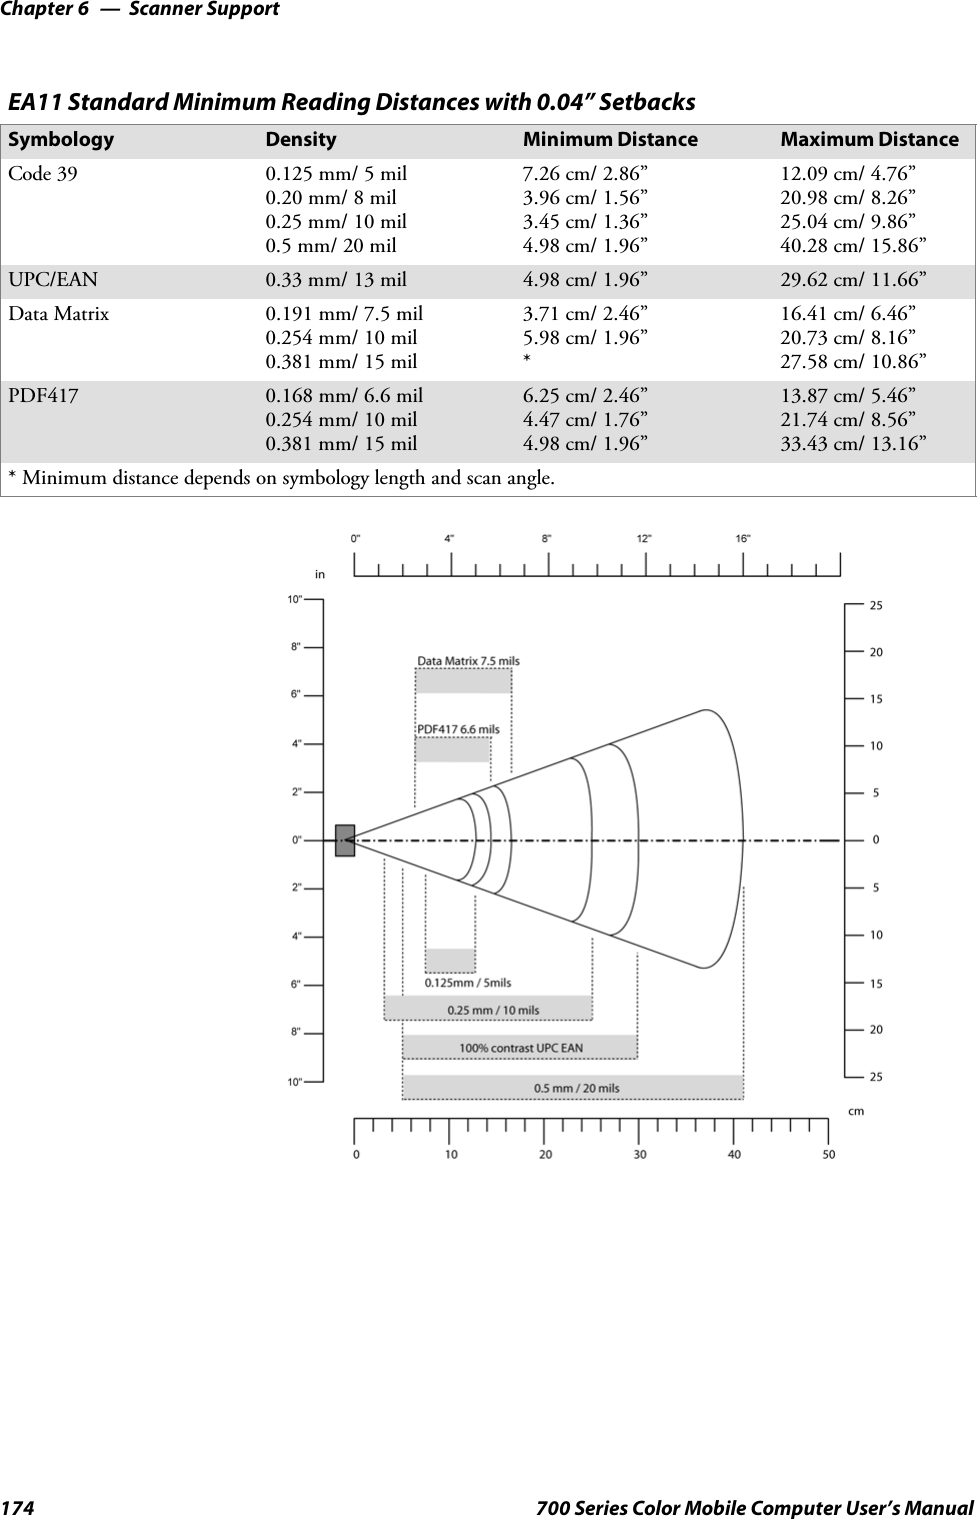 Scanner SupportChapter —6174 700 Series Color Mobile Computer User’s ManualEA11 Standard Minimum Reading Distances with 0.04” SetbacksSymbology Density Minimum Distance Maximum DistanceCode 39 0.125 mm/ 5 mil0.20 mm/ 8 mil0.25 mm/ 10 mil0.5 mm/ 20 mil7.26 cm/ 2.86”3.96 cm/ 1.56”3.45 cm/ 1.36”4.98 cm/ 1.96”12.09 cm/ 4.76”20.98 cm/ 8.26”25.04 cm/ 9.86”40.28 cm/ 15.86”UPC/EAN 0.33 mm/ 13 mil 4.98 cm/ 1.96” 29.62 cm/ 11.66”Data Matrix 0.191 mm/ 7.5 mil0.254 mm/ 10 mil0.381 mm/ 15 mil3.71 cm/ 2.46”5.98 cm/ 1.96”*16.41 cm/ 6.46”20.73 cm/ 8.16”27.58 cm/ 10.86”PDF417 0.168 mm/ 6.6 mil0.254 mm/ 10 mil0.381 mm/ 15 mil6.25 cm/ 2.46”4.47 cm/ 1.76”4.98 cm/ 1.96”13.87 cm/ 5.46”21.74 cm/ 8.56”33.43 cm/ 13.16”* Minimum distance depends on symbology length and scan angle.